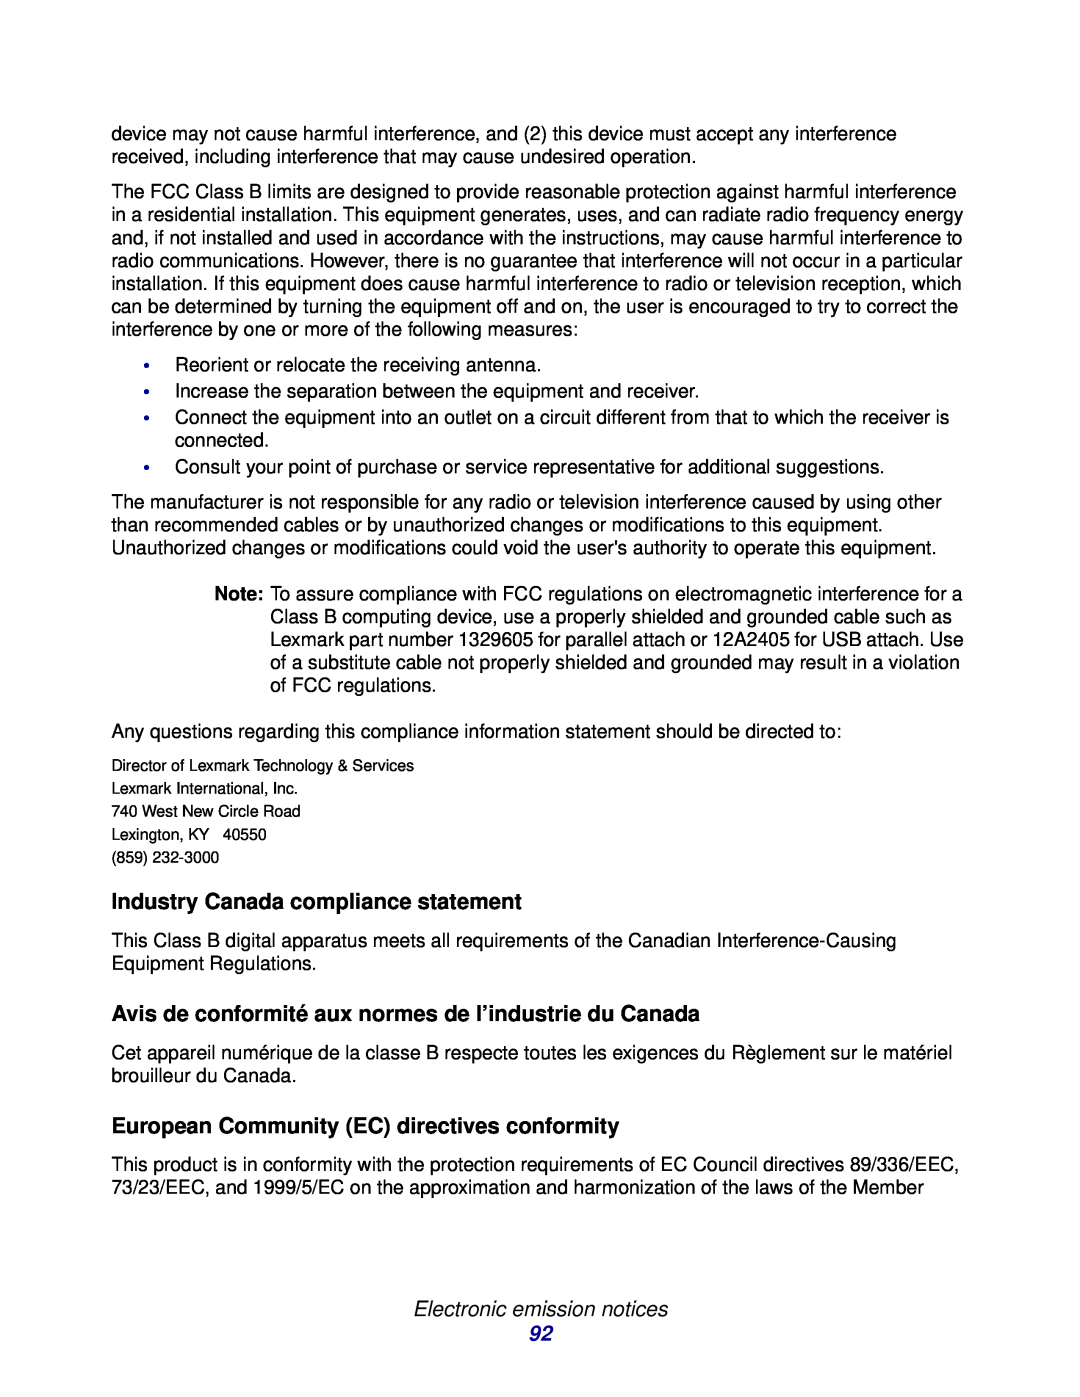 Lexmark X215 MFP manual Industry Canada compliance statement, European Community EC directives conformity 